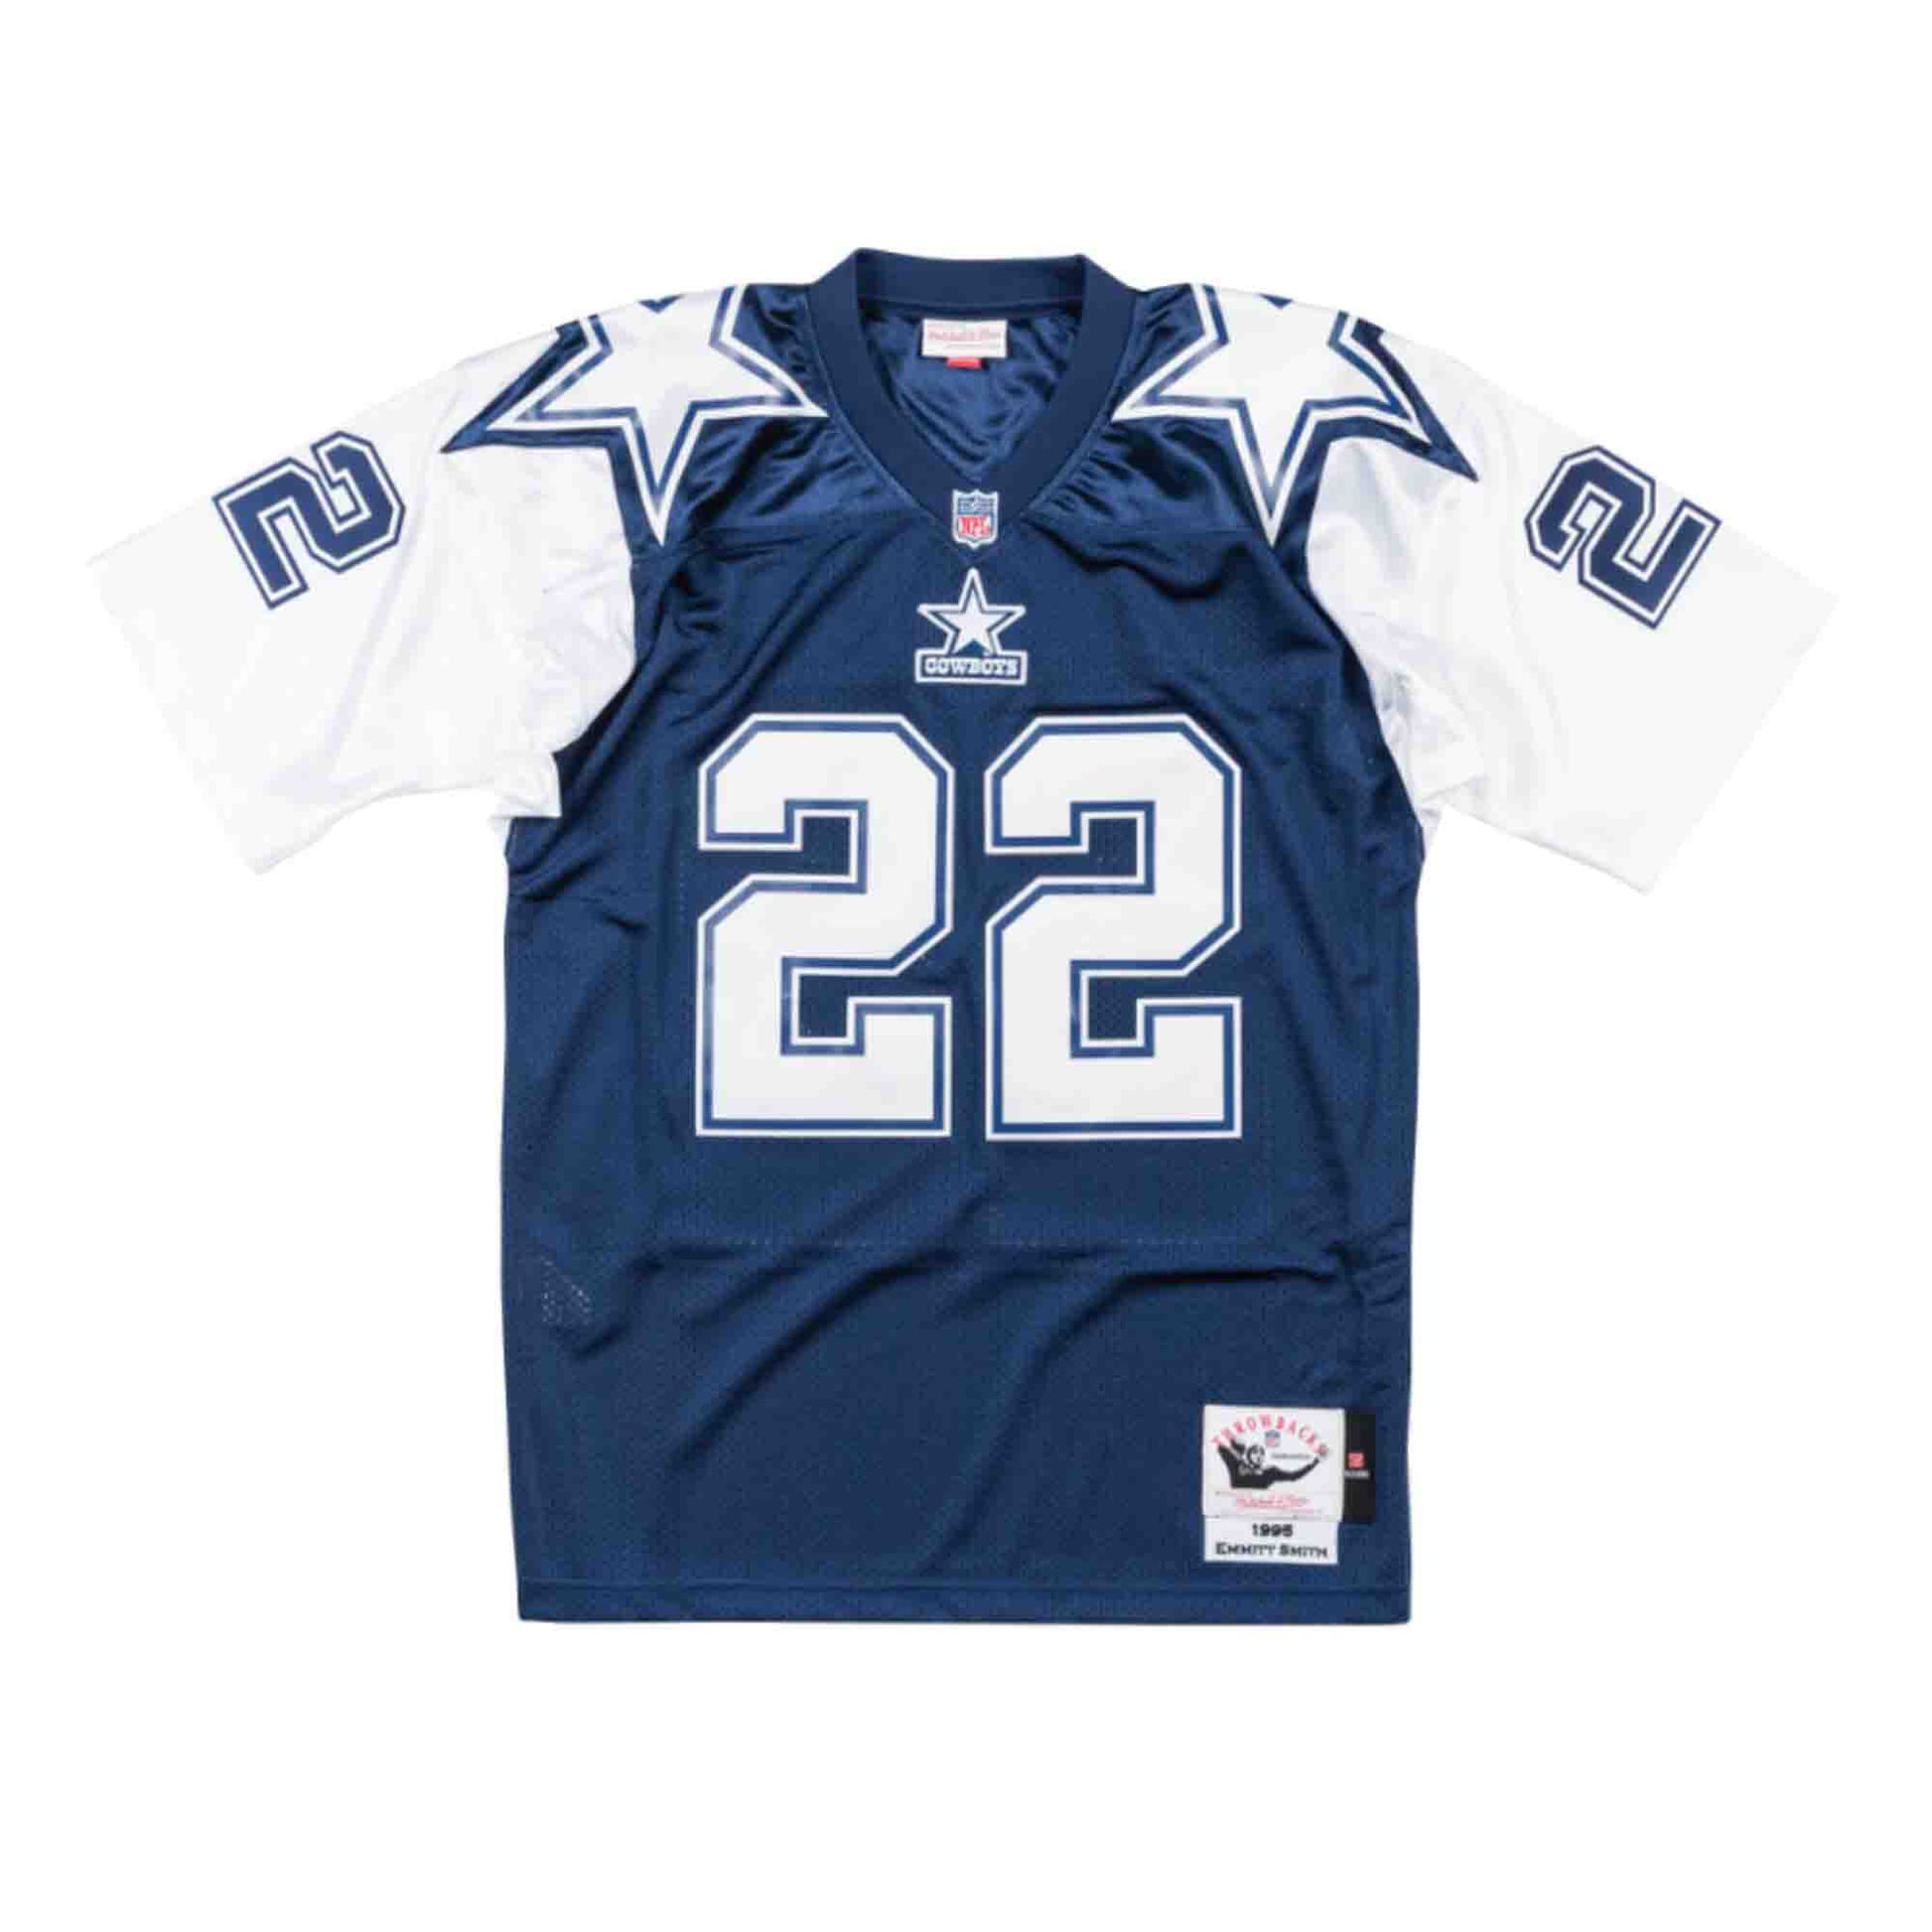 New Dallas Cowboys NFL Football Emmitt Smith 22 jersey style t